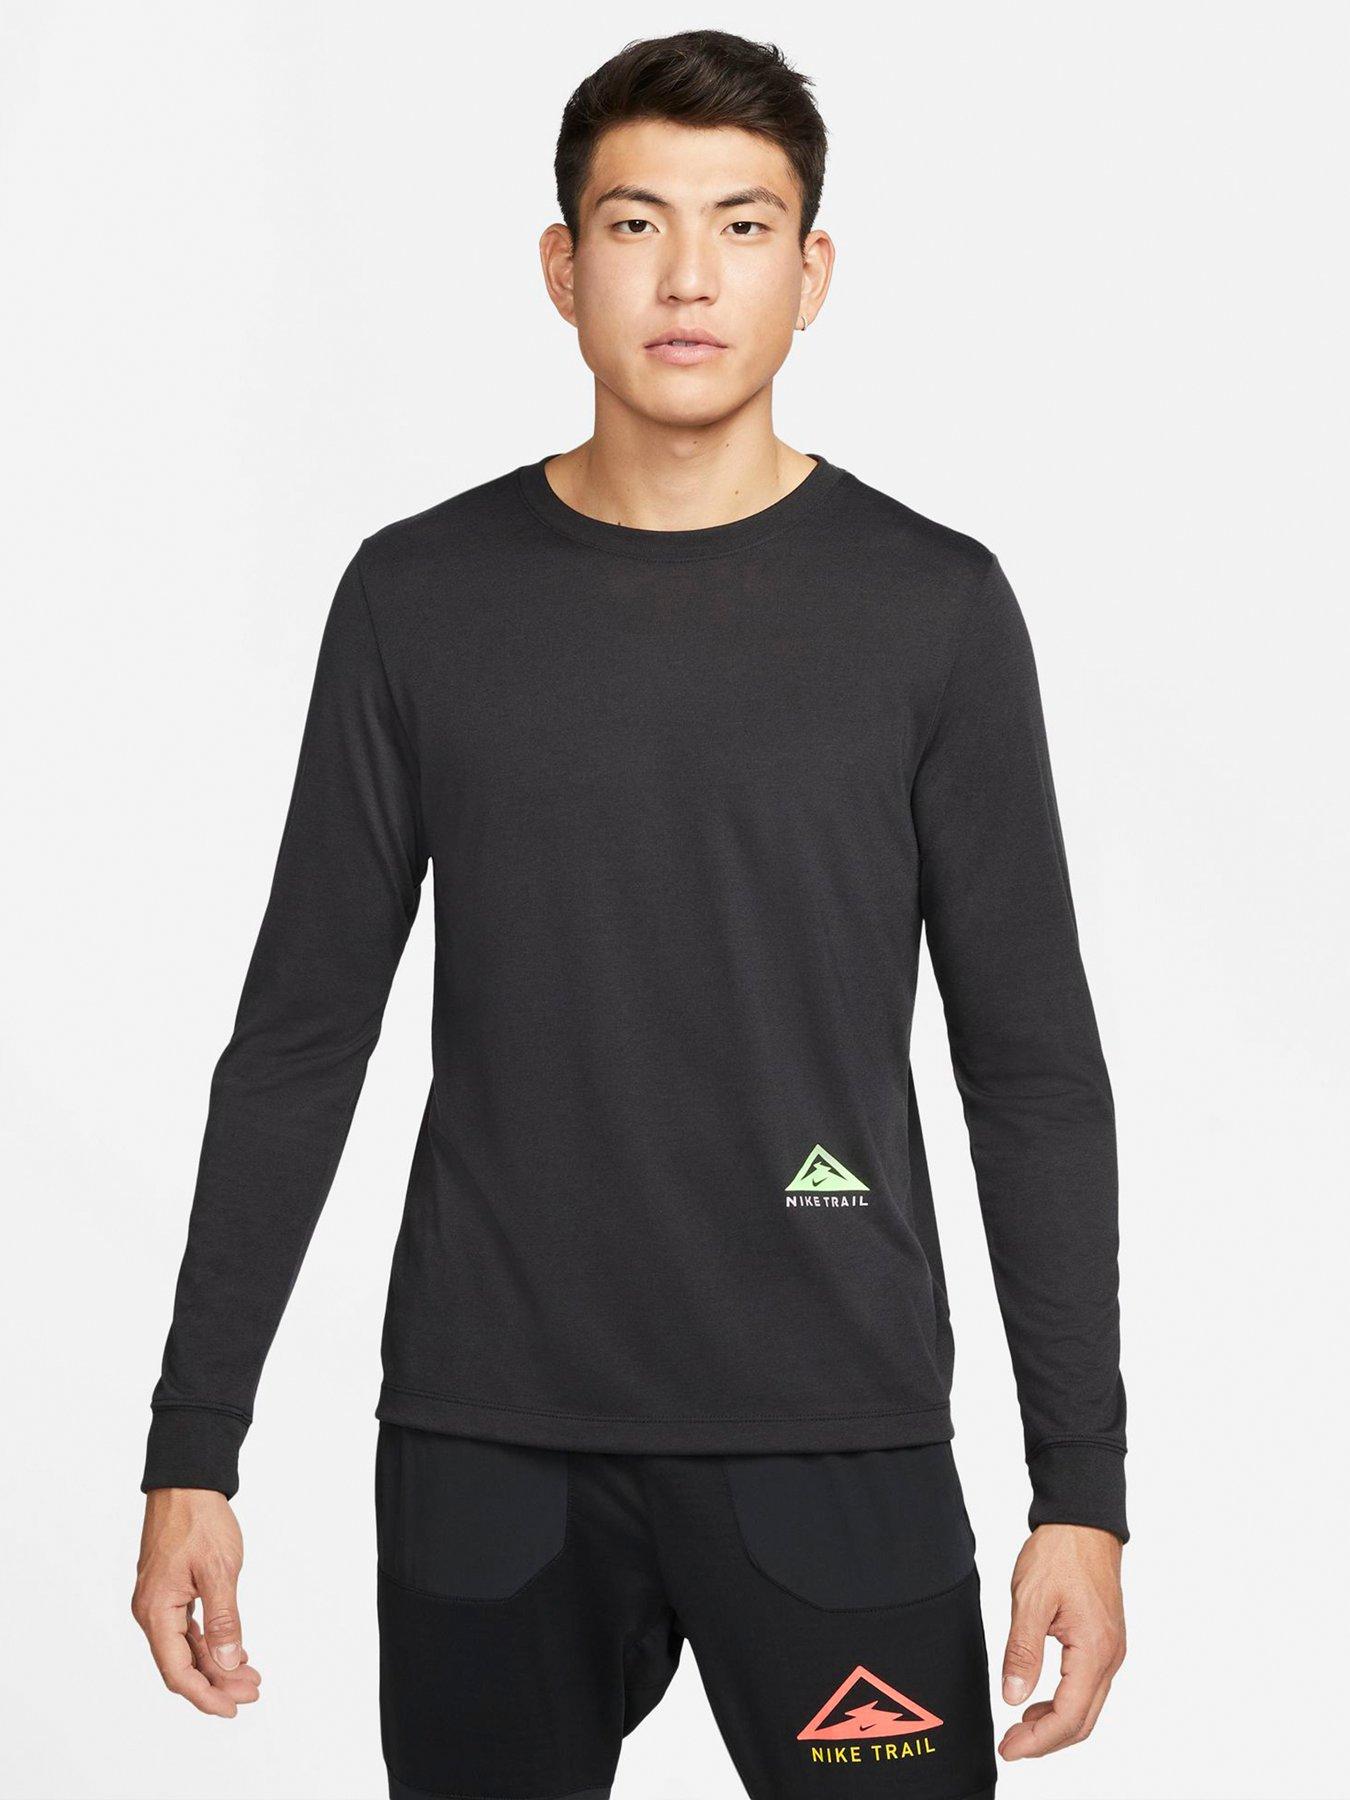 Nike Trail Dry-FIT Long Sleeve T-Shirt - Black | very.co.uk